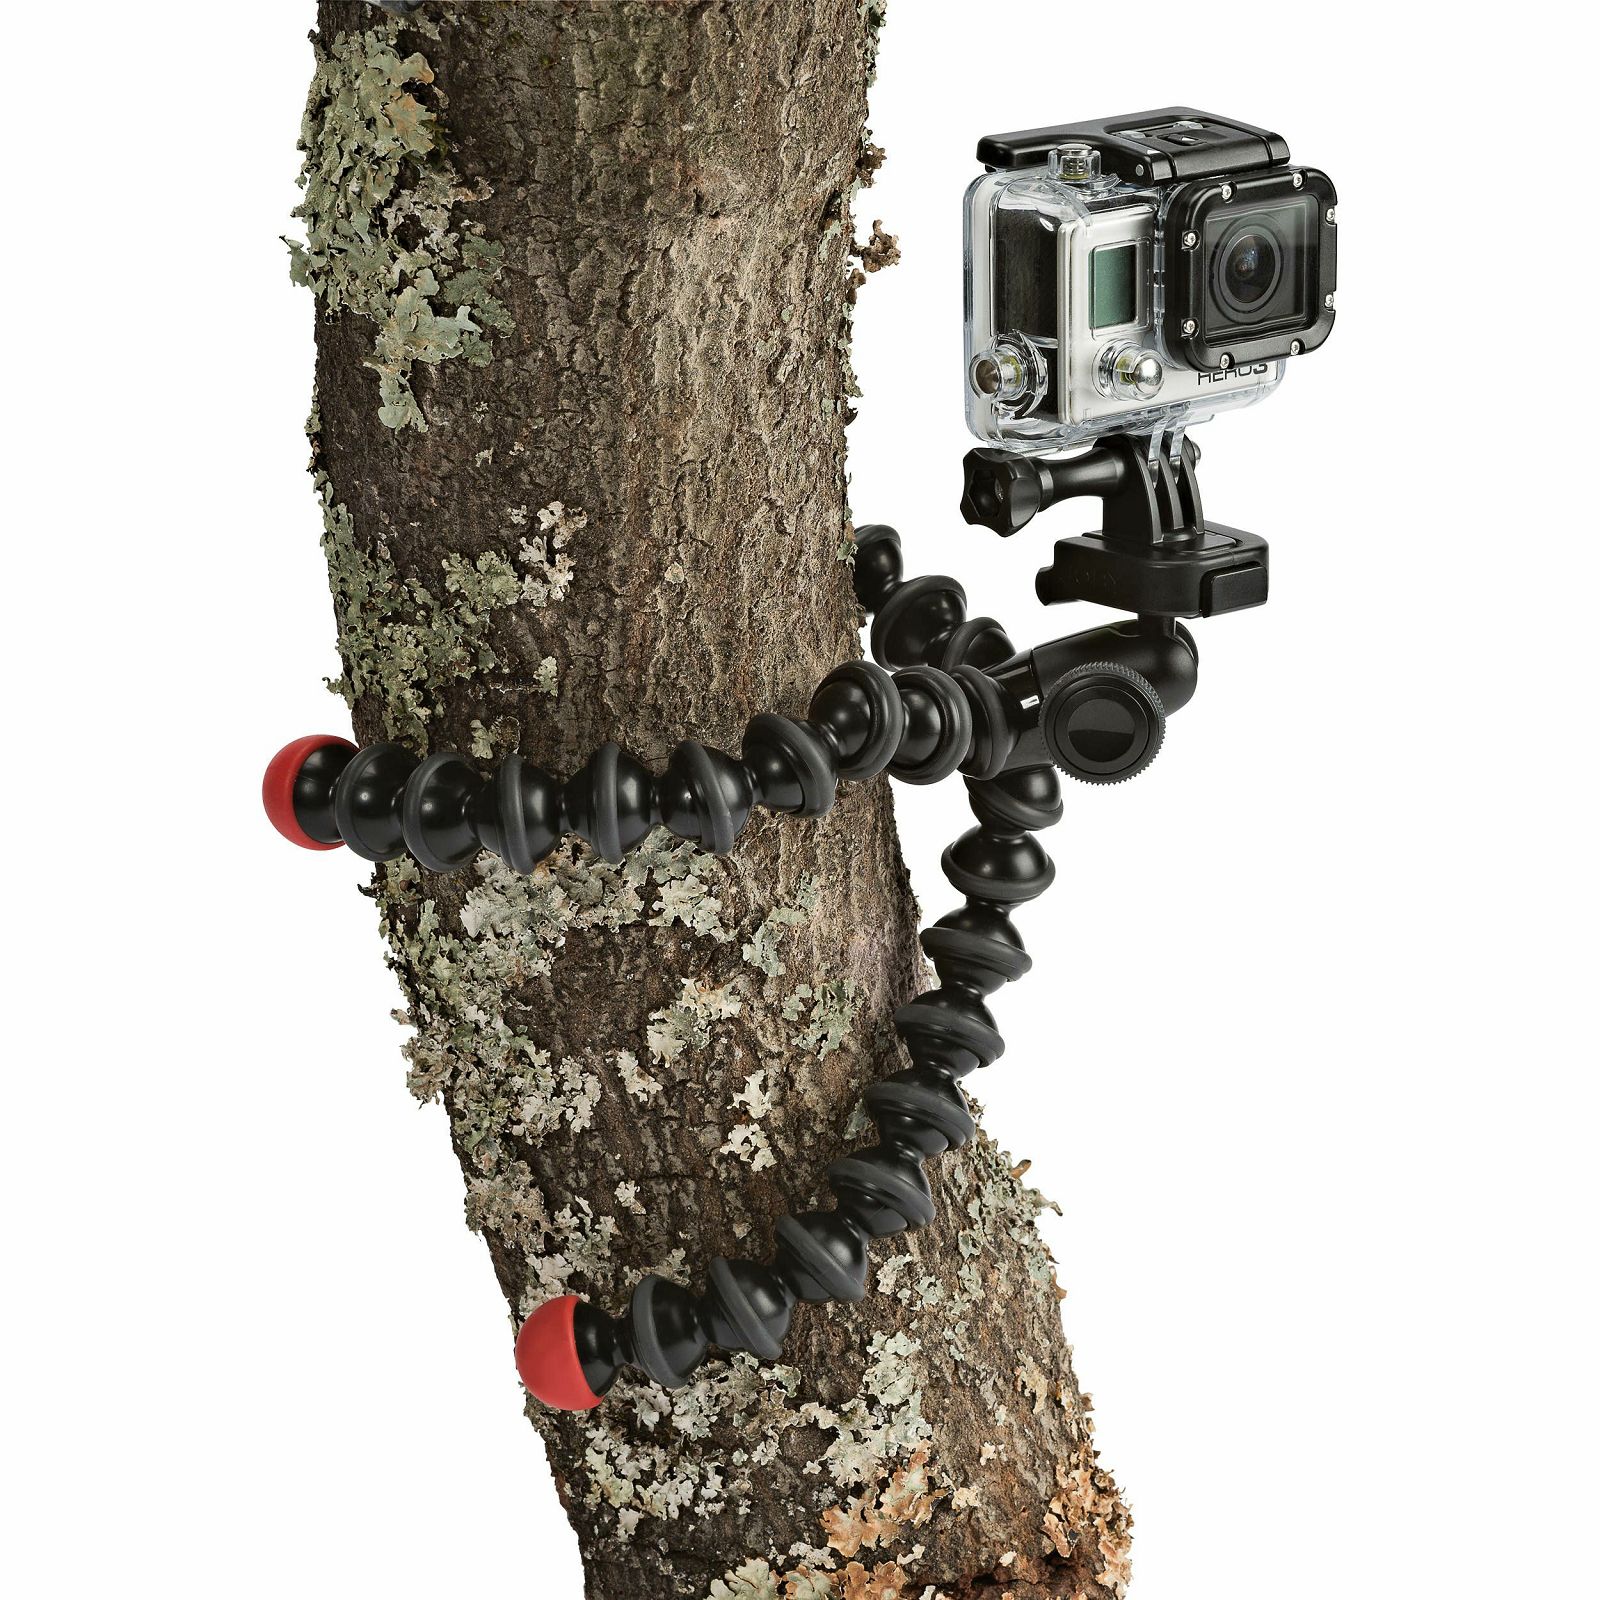 Joby Gorillapod Action tripod with GoPro Mount fleksibilni mini stalak s kuglastom glavom (JB01300)